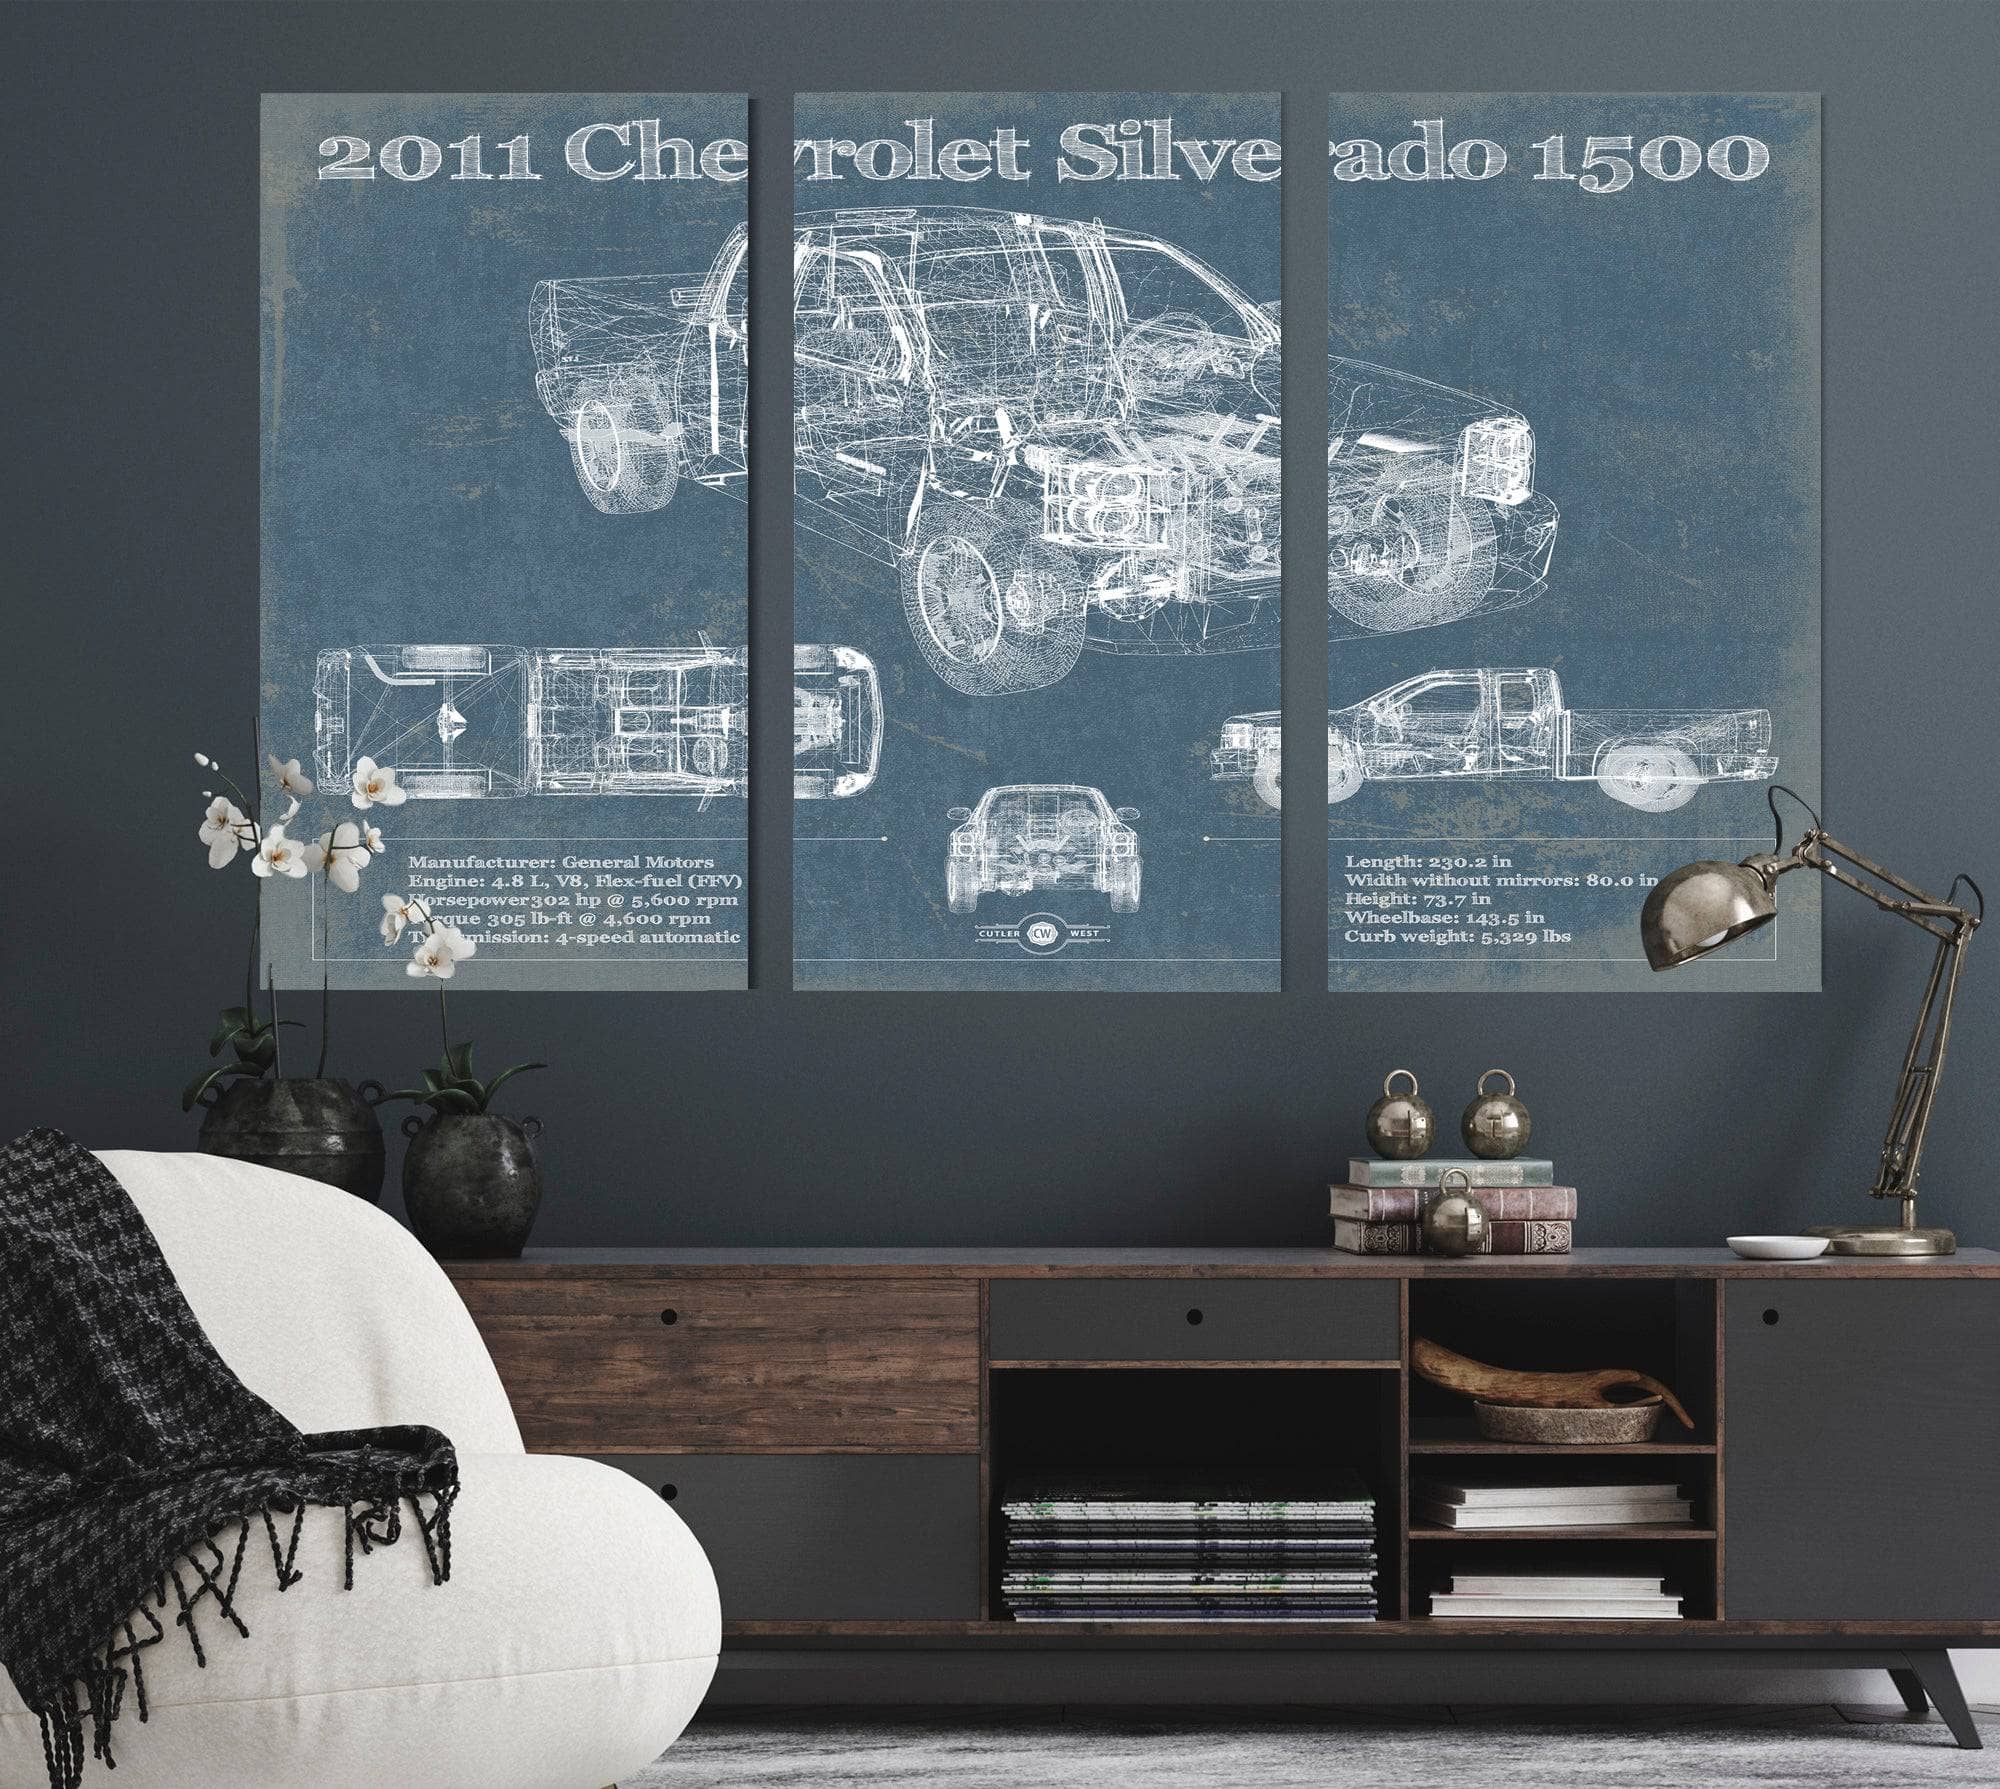 2011 Chevrolet Silverado 1500 Vintage Blueprint Auto Print